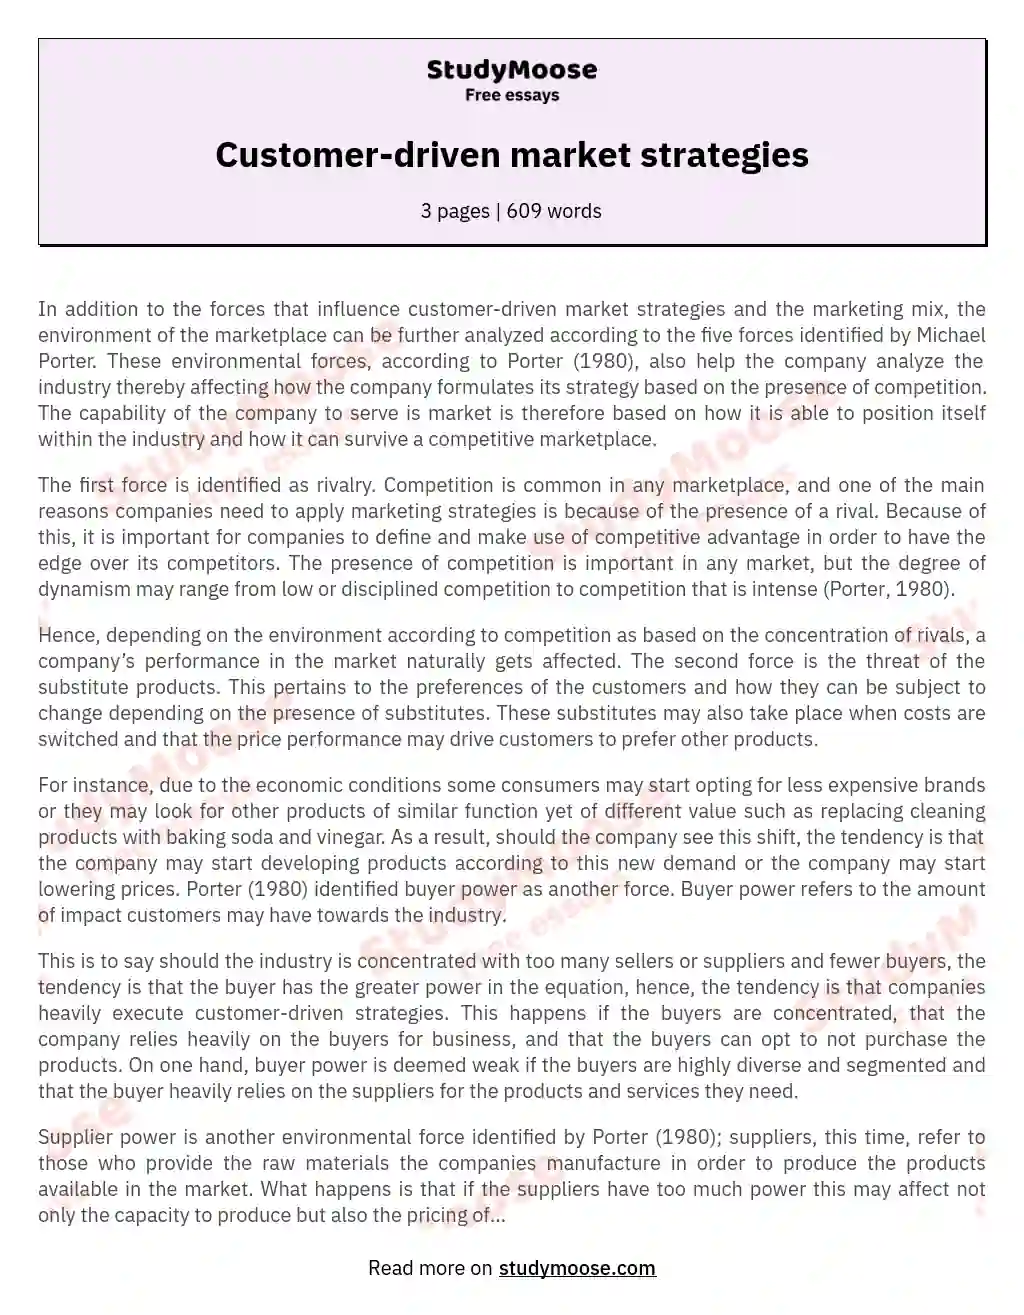 Customer-driven market strategies essay